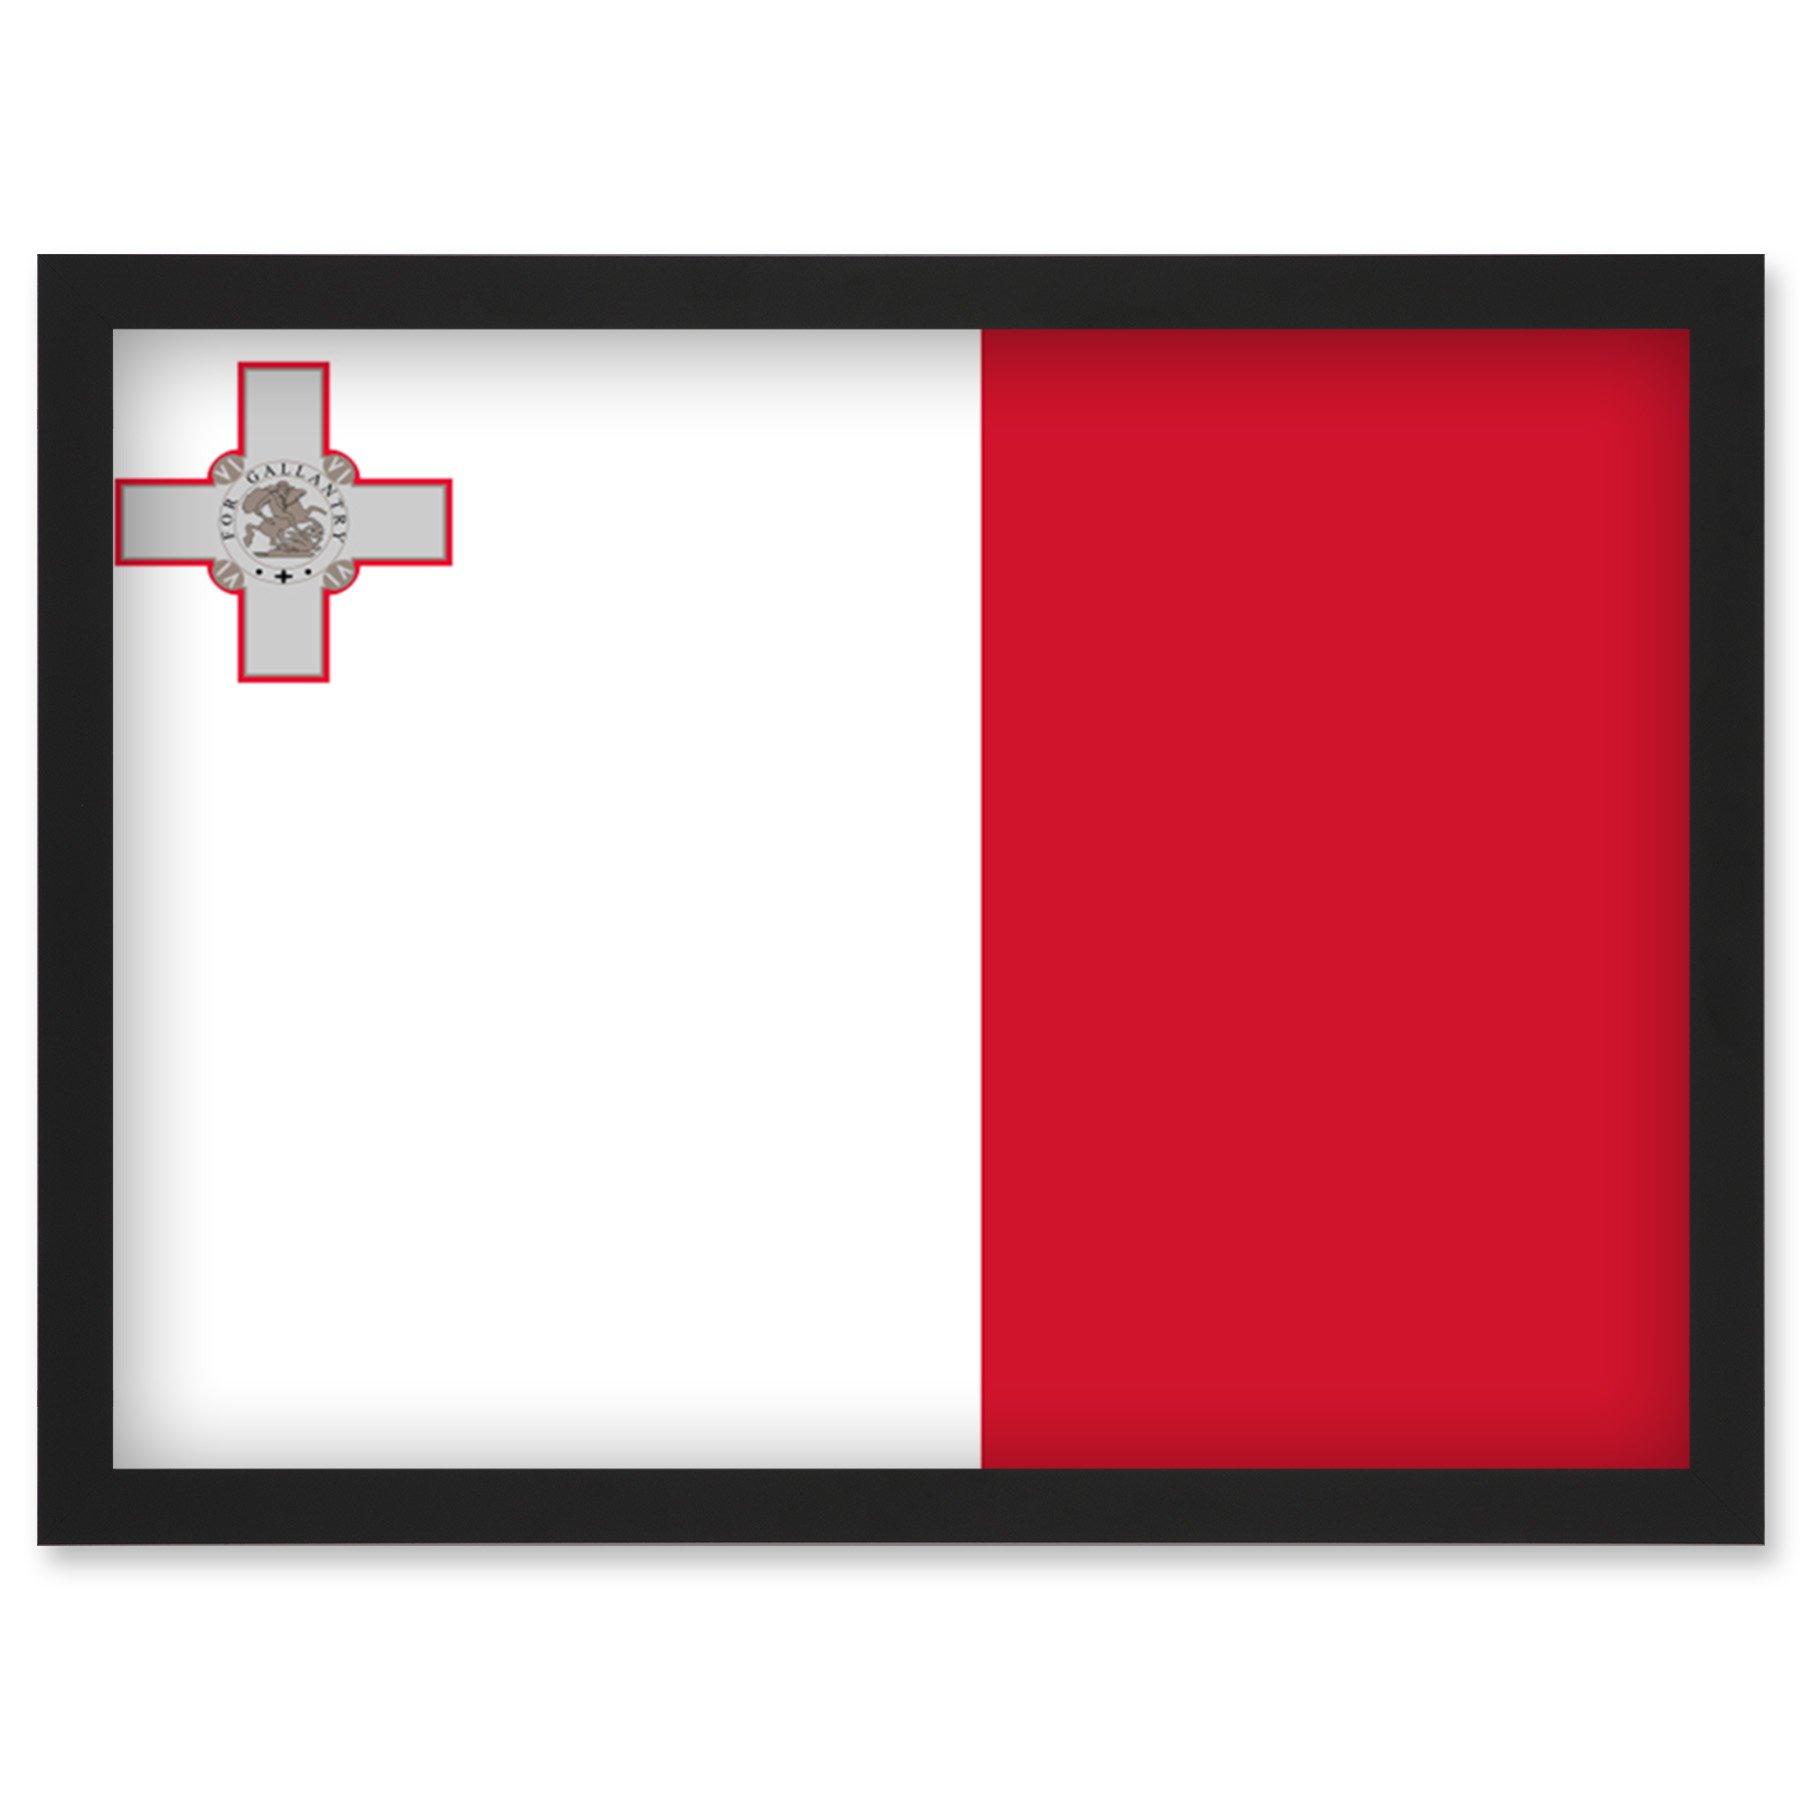 malta national flag vexillology world flags country region poster artwork framed wall art print a4